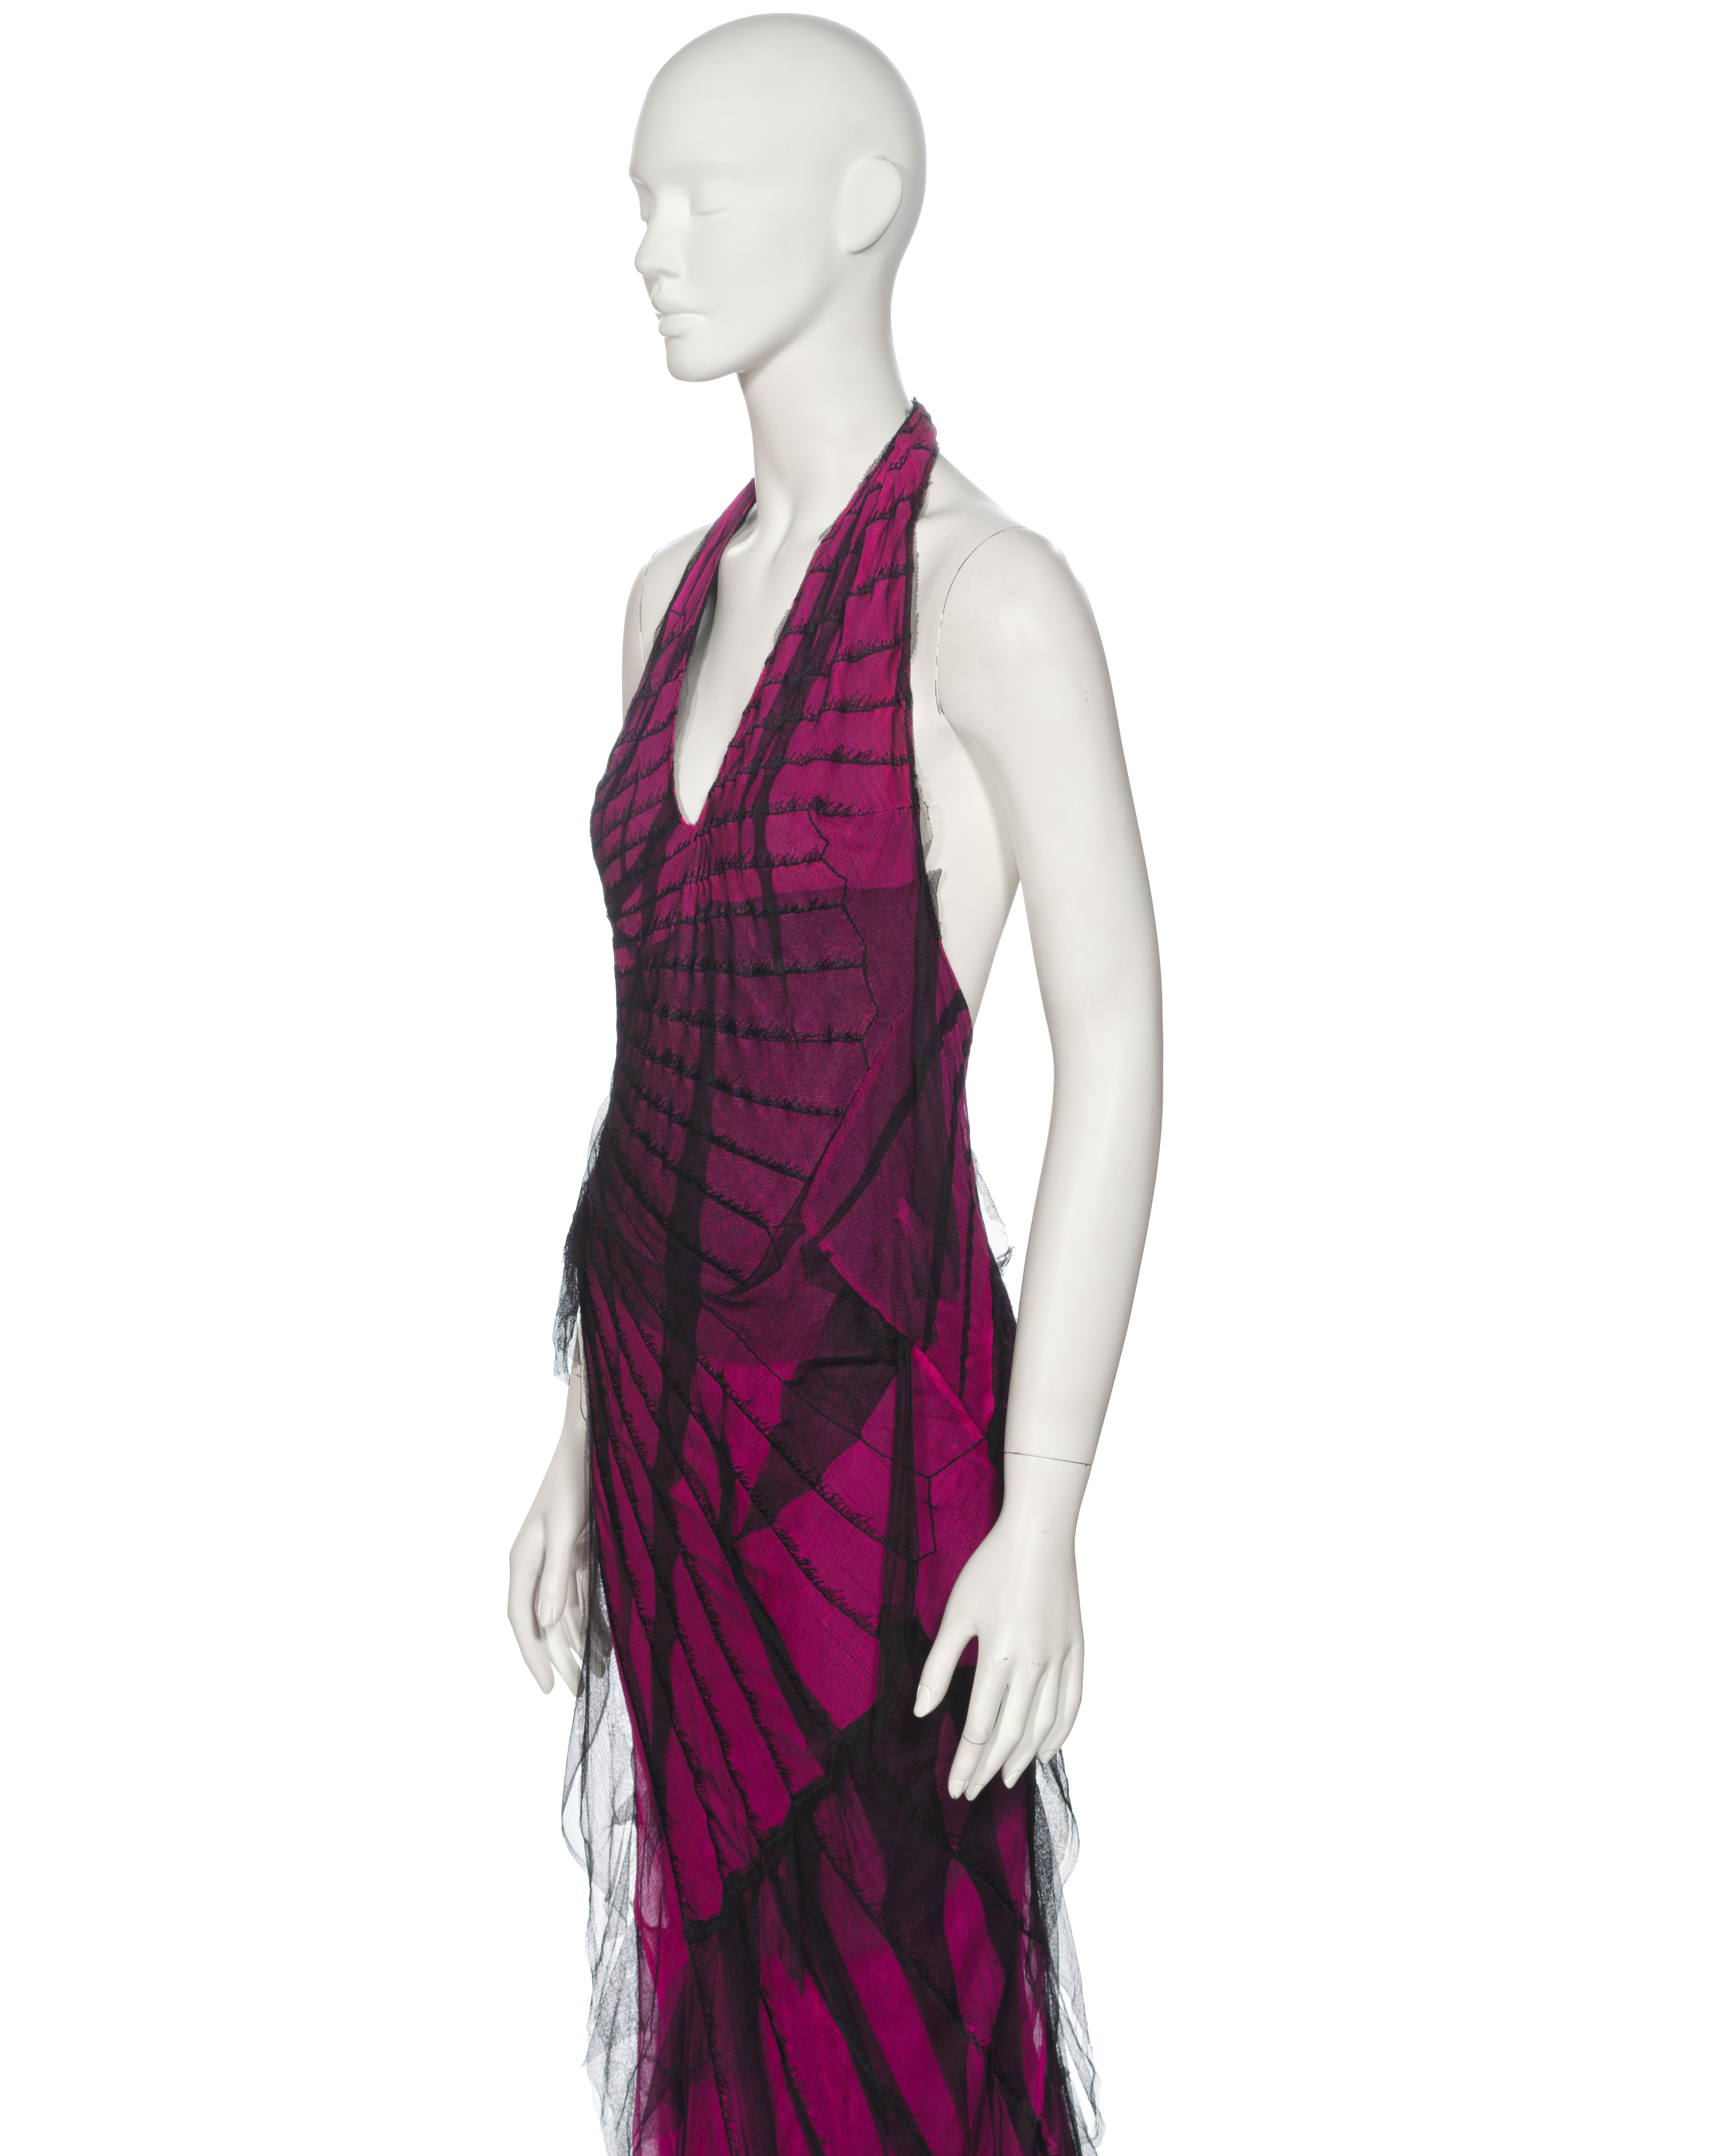 Roberto Cavalli Distressed Pink Silk Mesh Evening Halter Neck Dress, ss 2001 For Sale 8